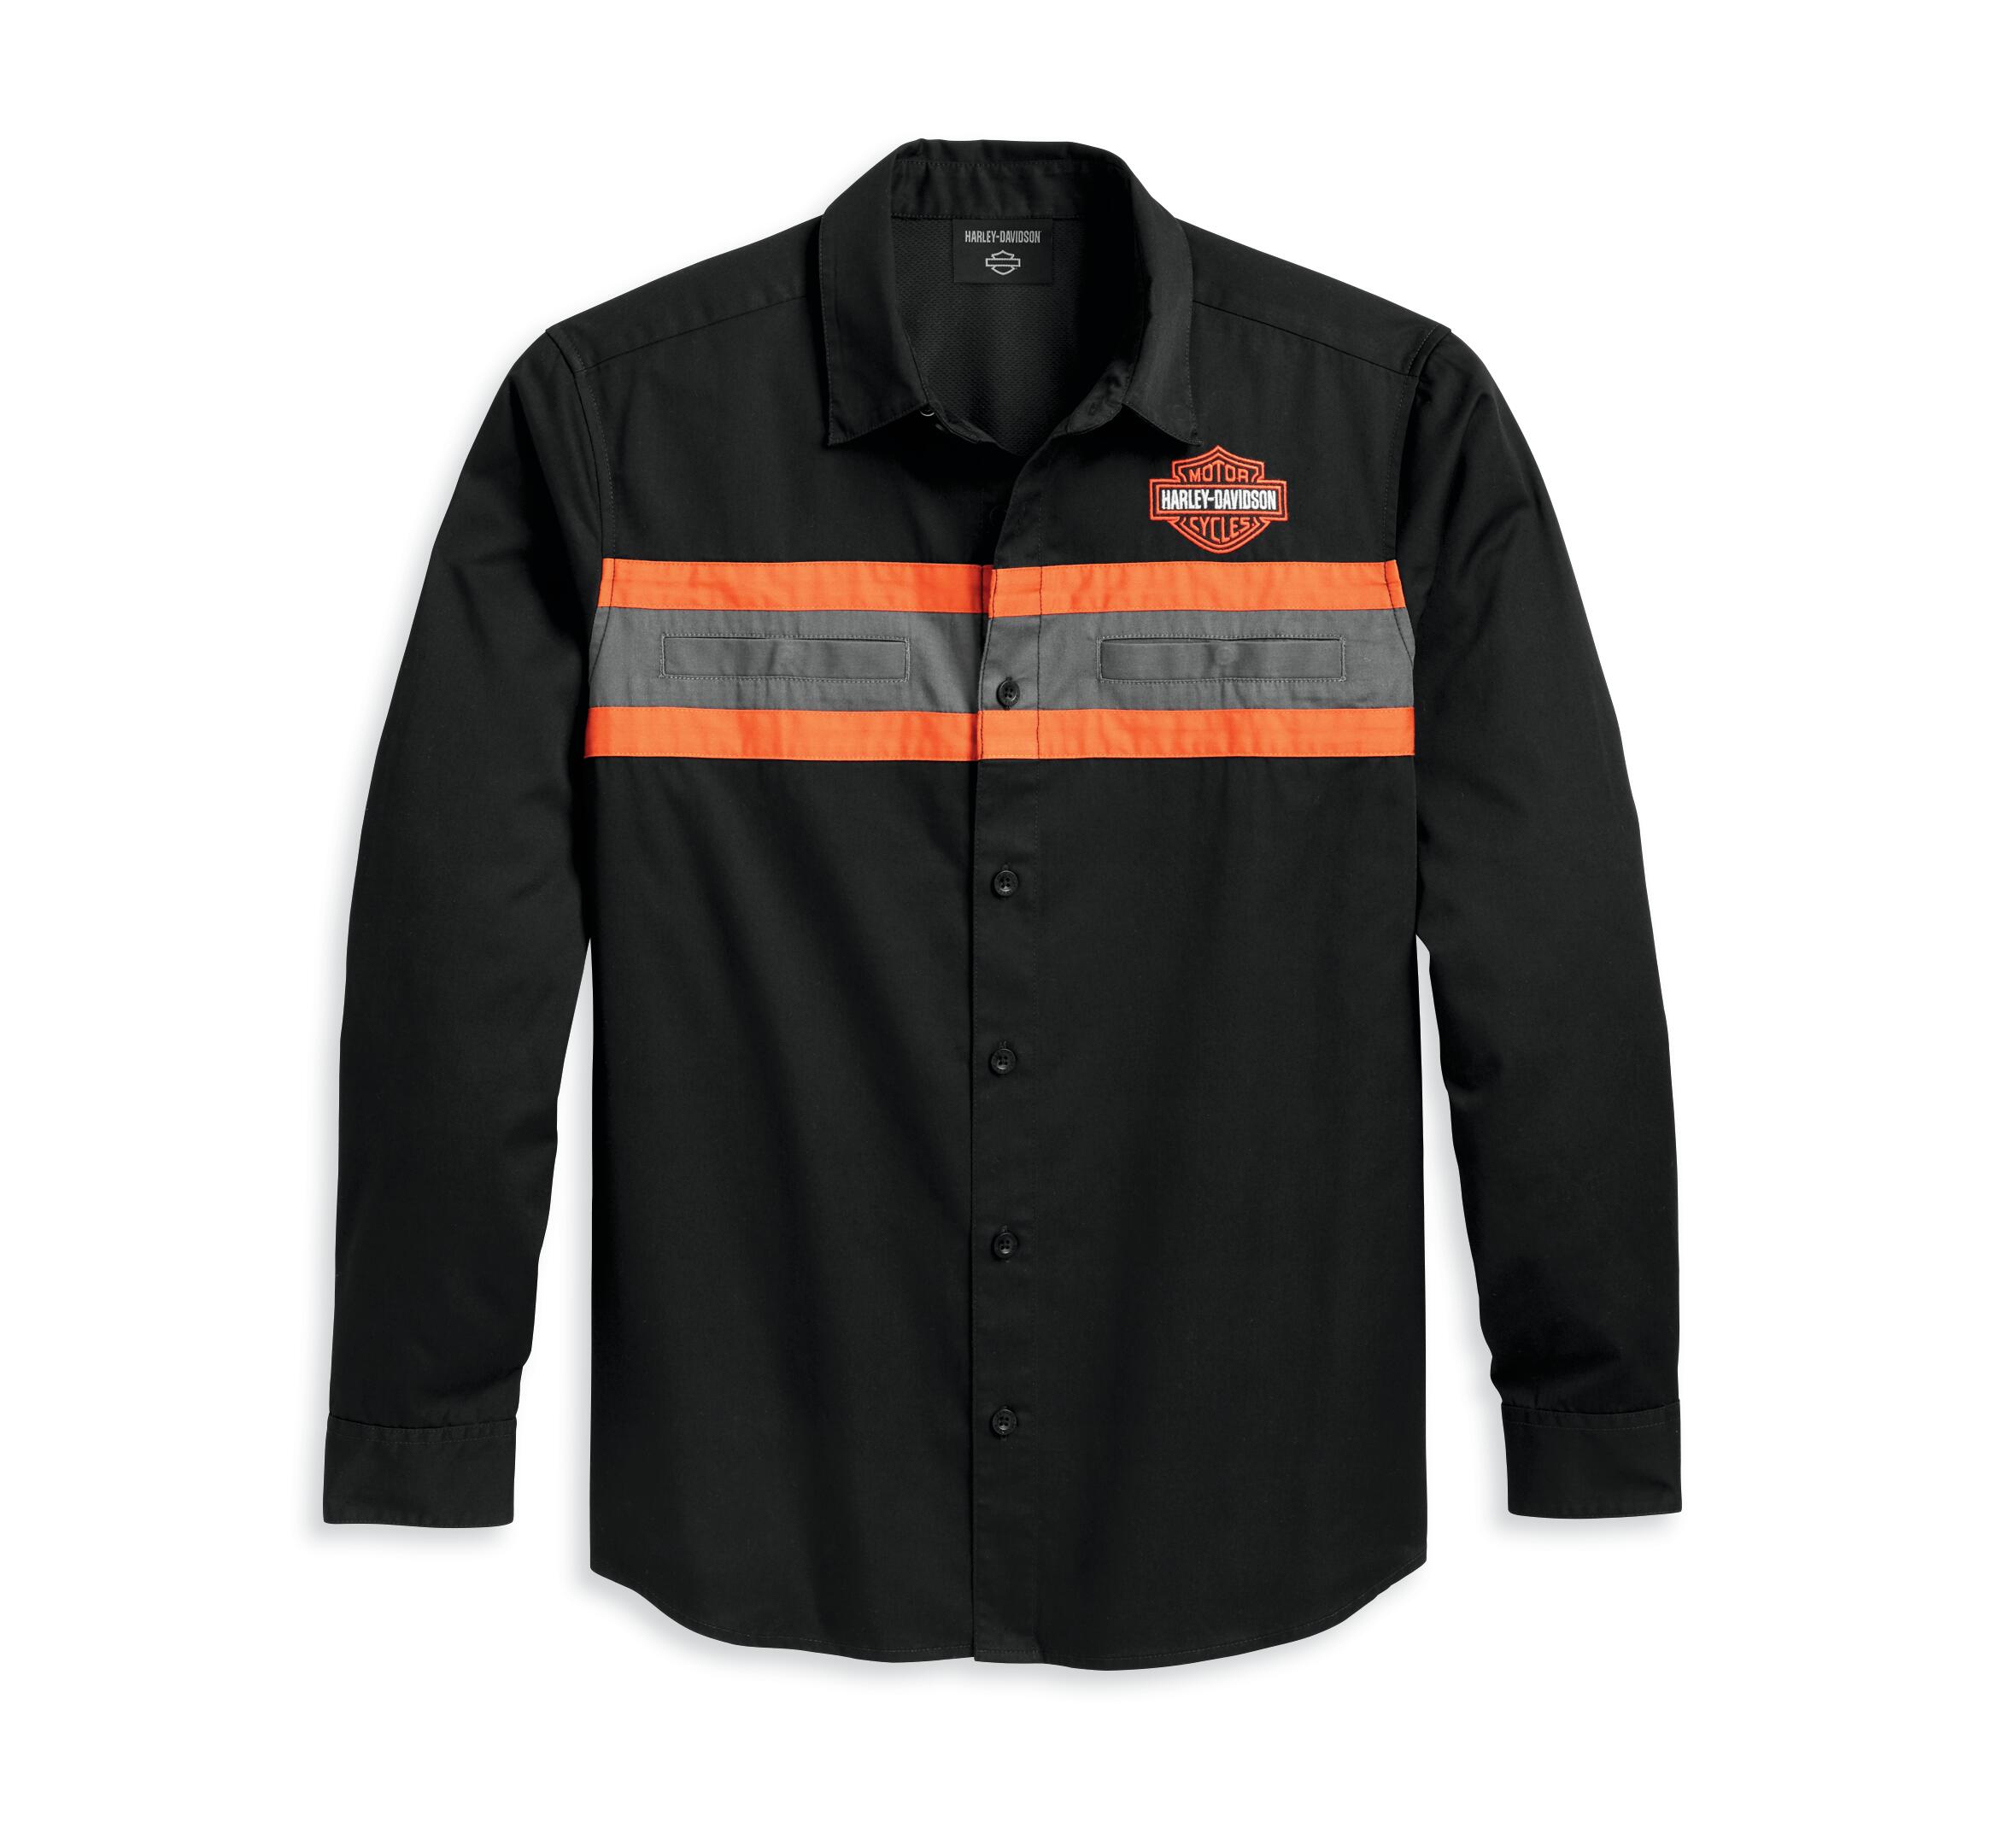 Harley-Davidson Men's Harley Performance Shirt Colorblocked, Black - 96127-23VM